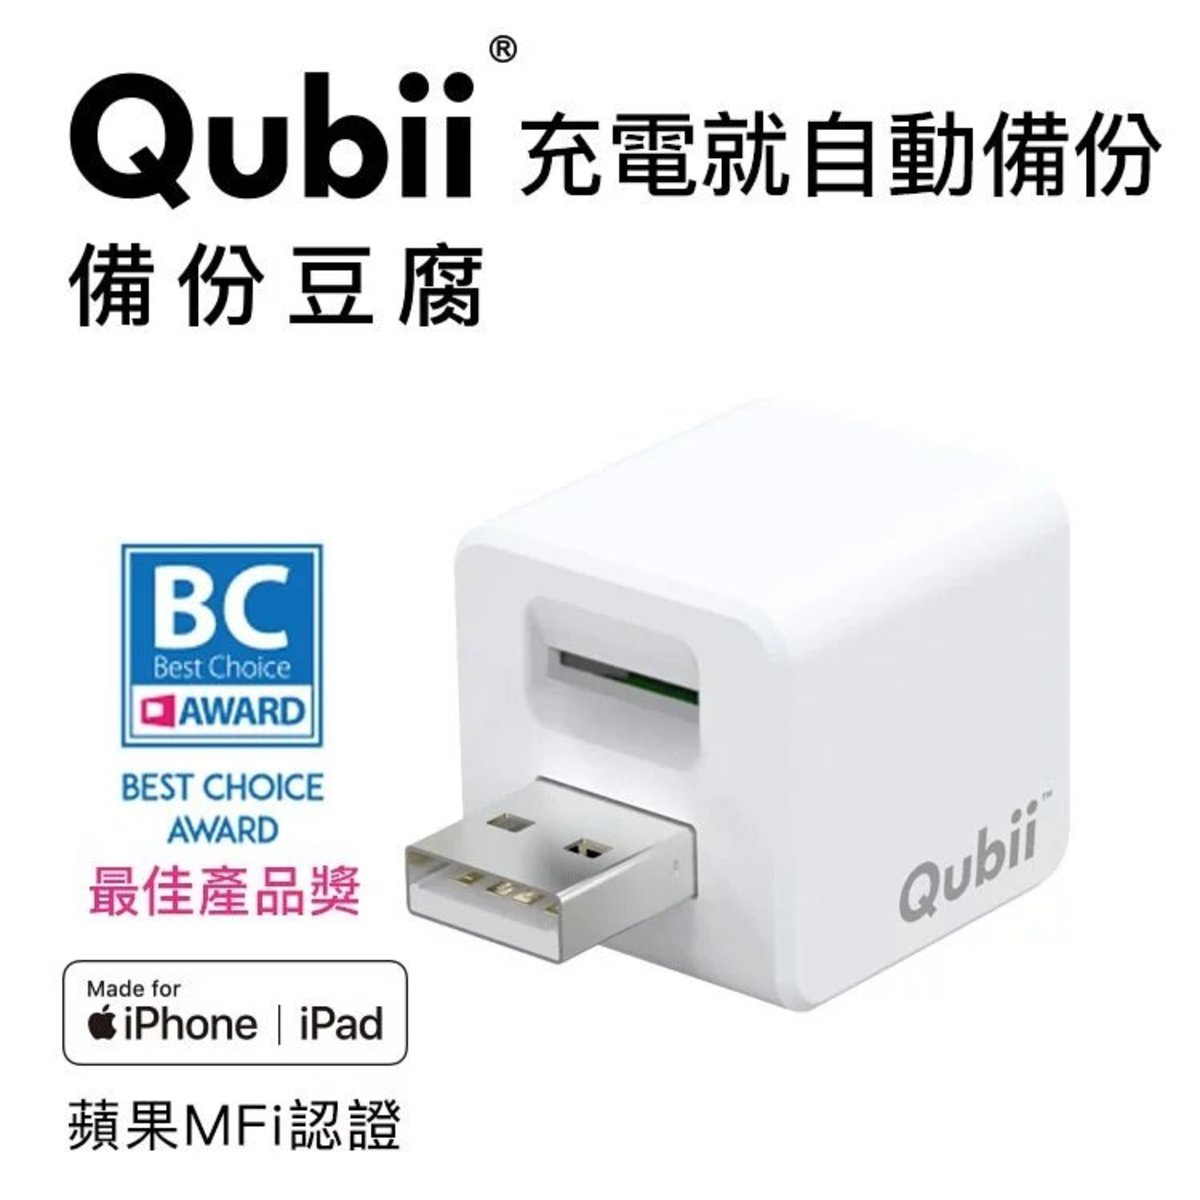 Maktar - Qubii Mobile Phone Automatic Backup Tofu - White